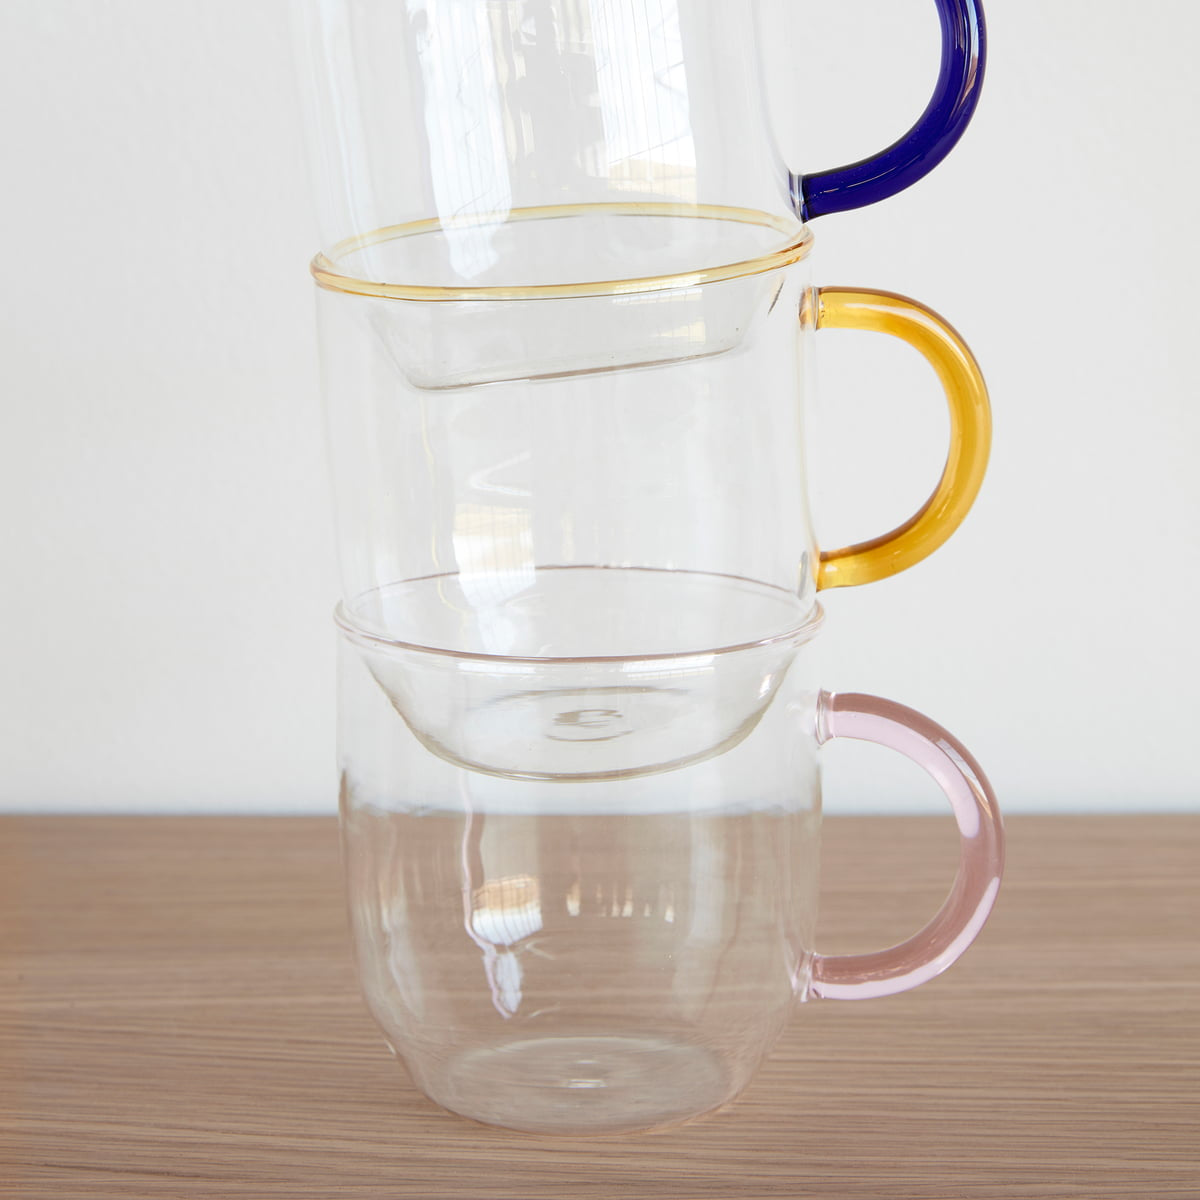 Kiosk Glass Mugs, set of 4